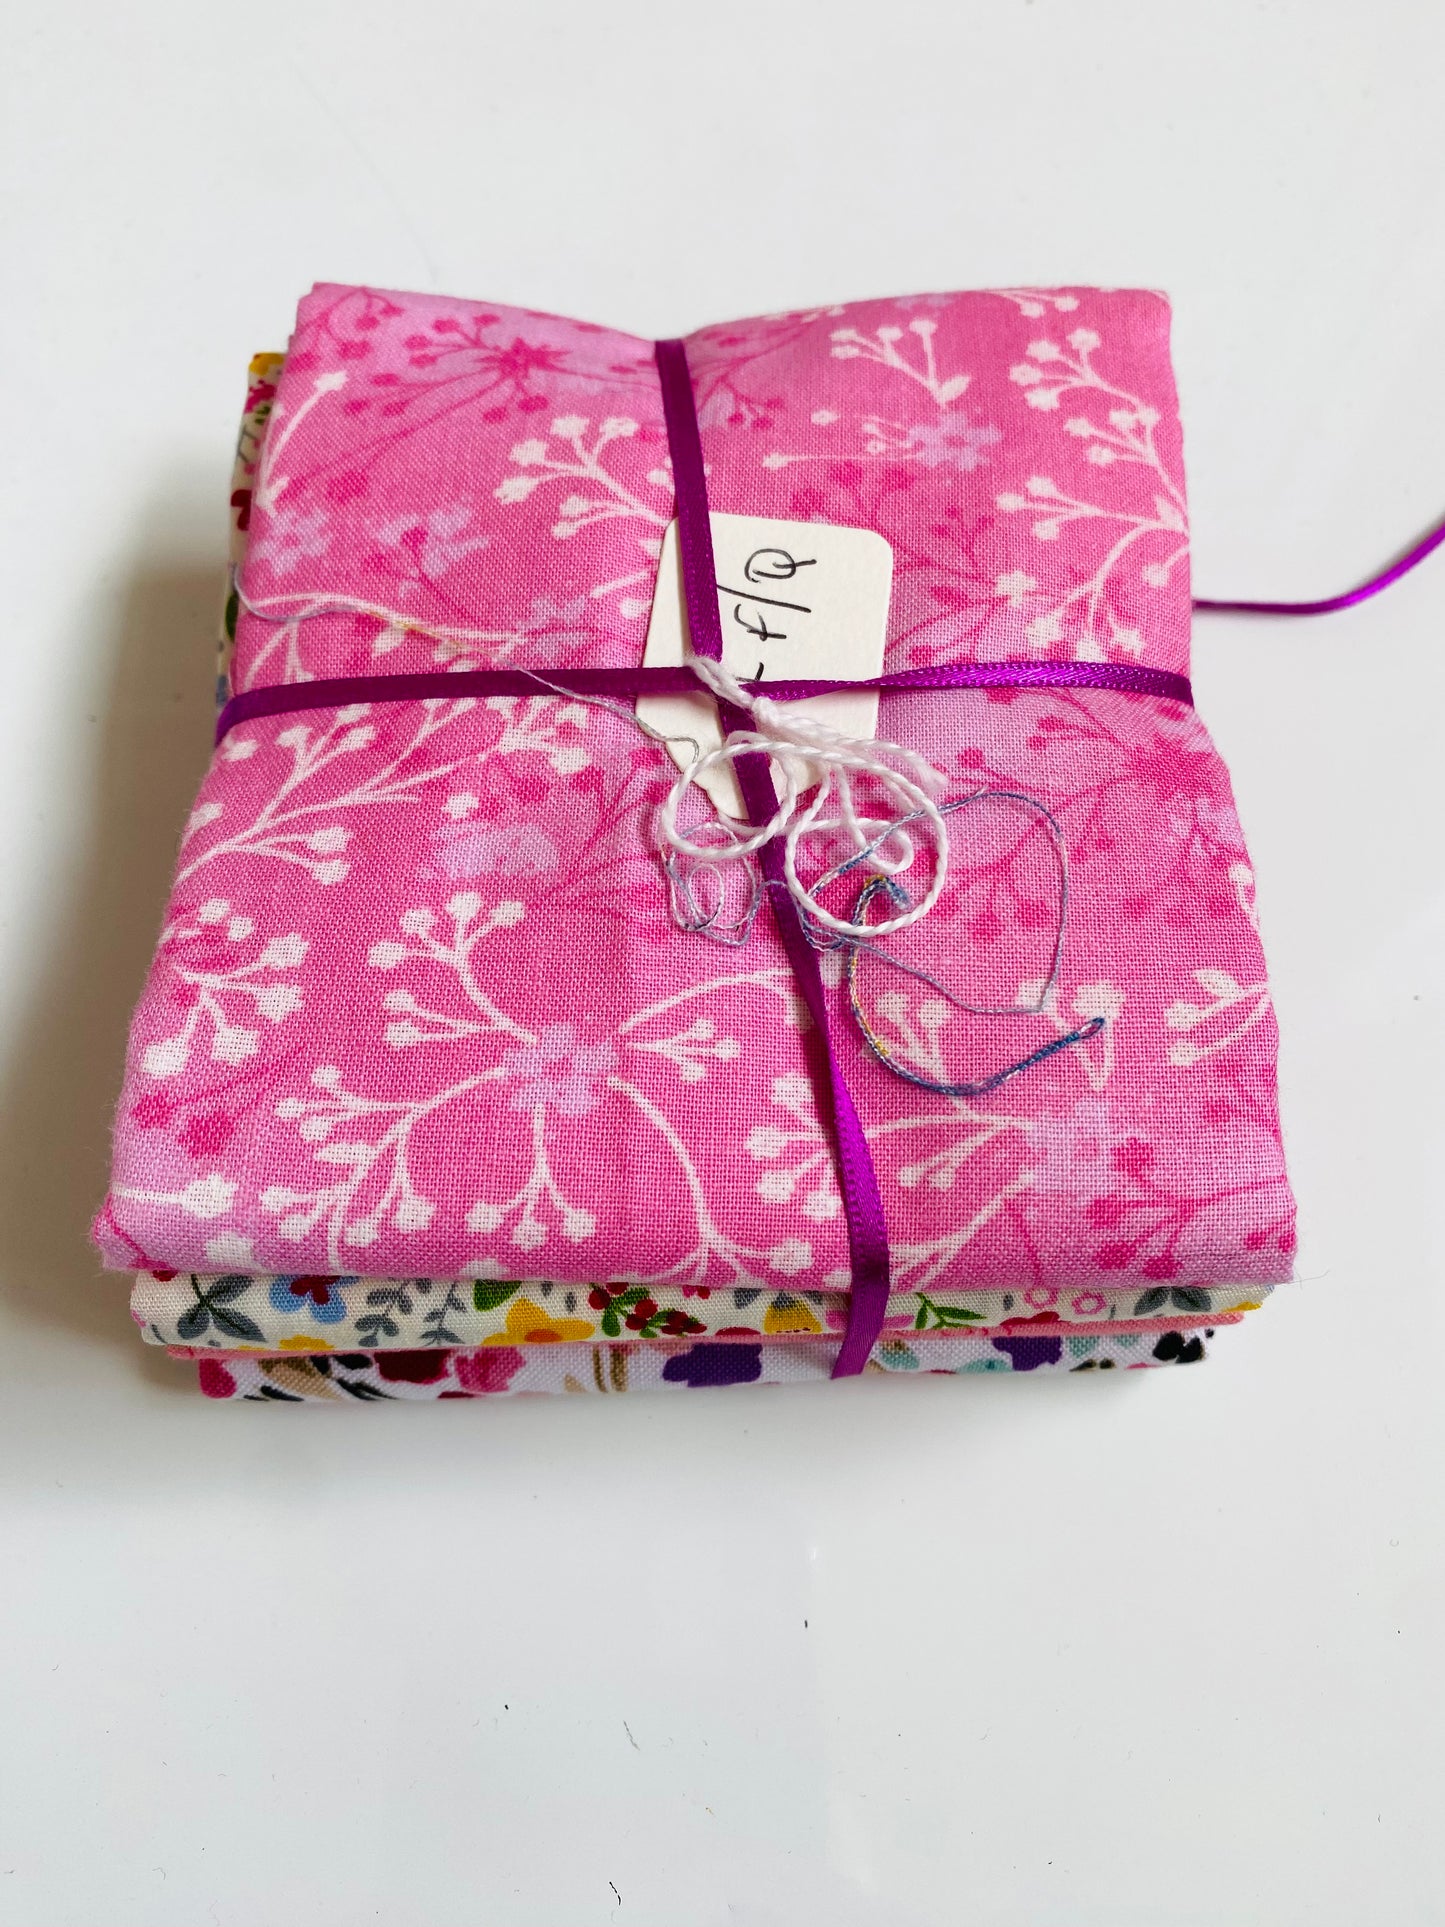 Fabric Fat Quarter Bundle - 'Summer Pinks' - 100% Cotton